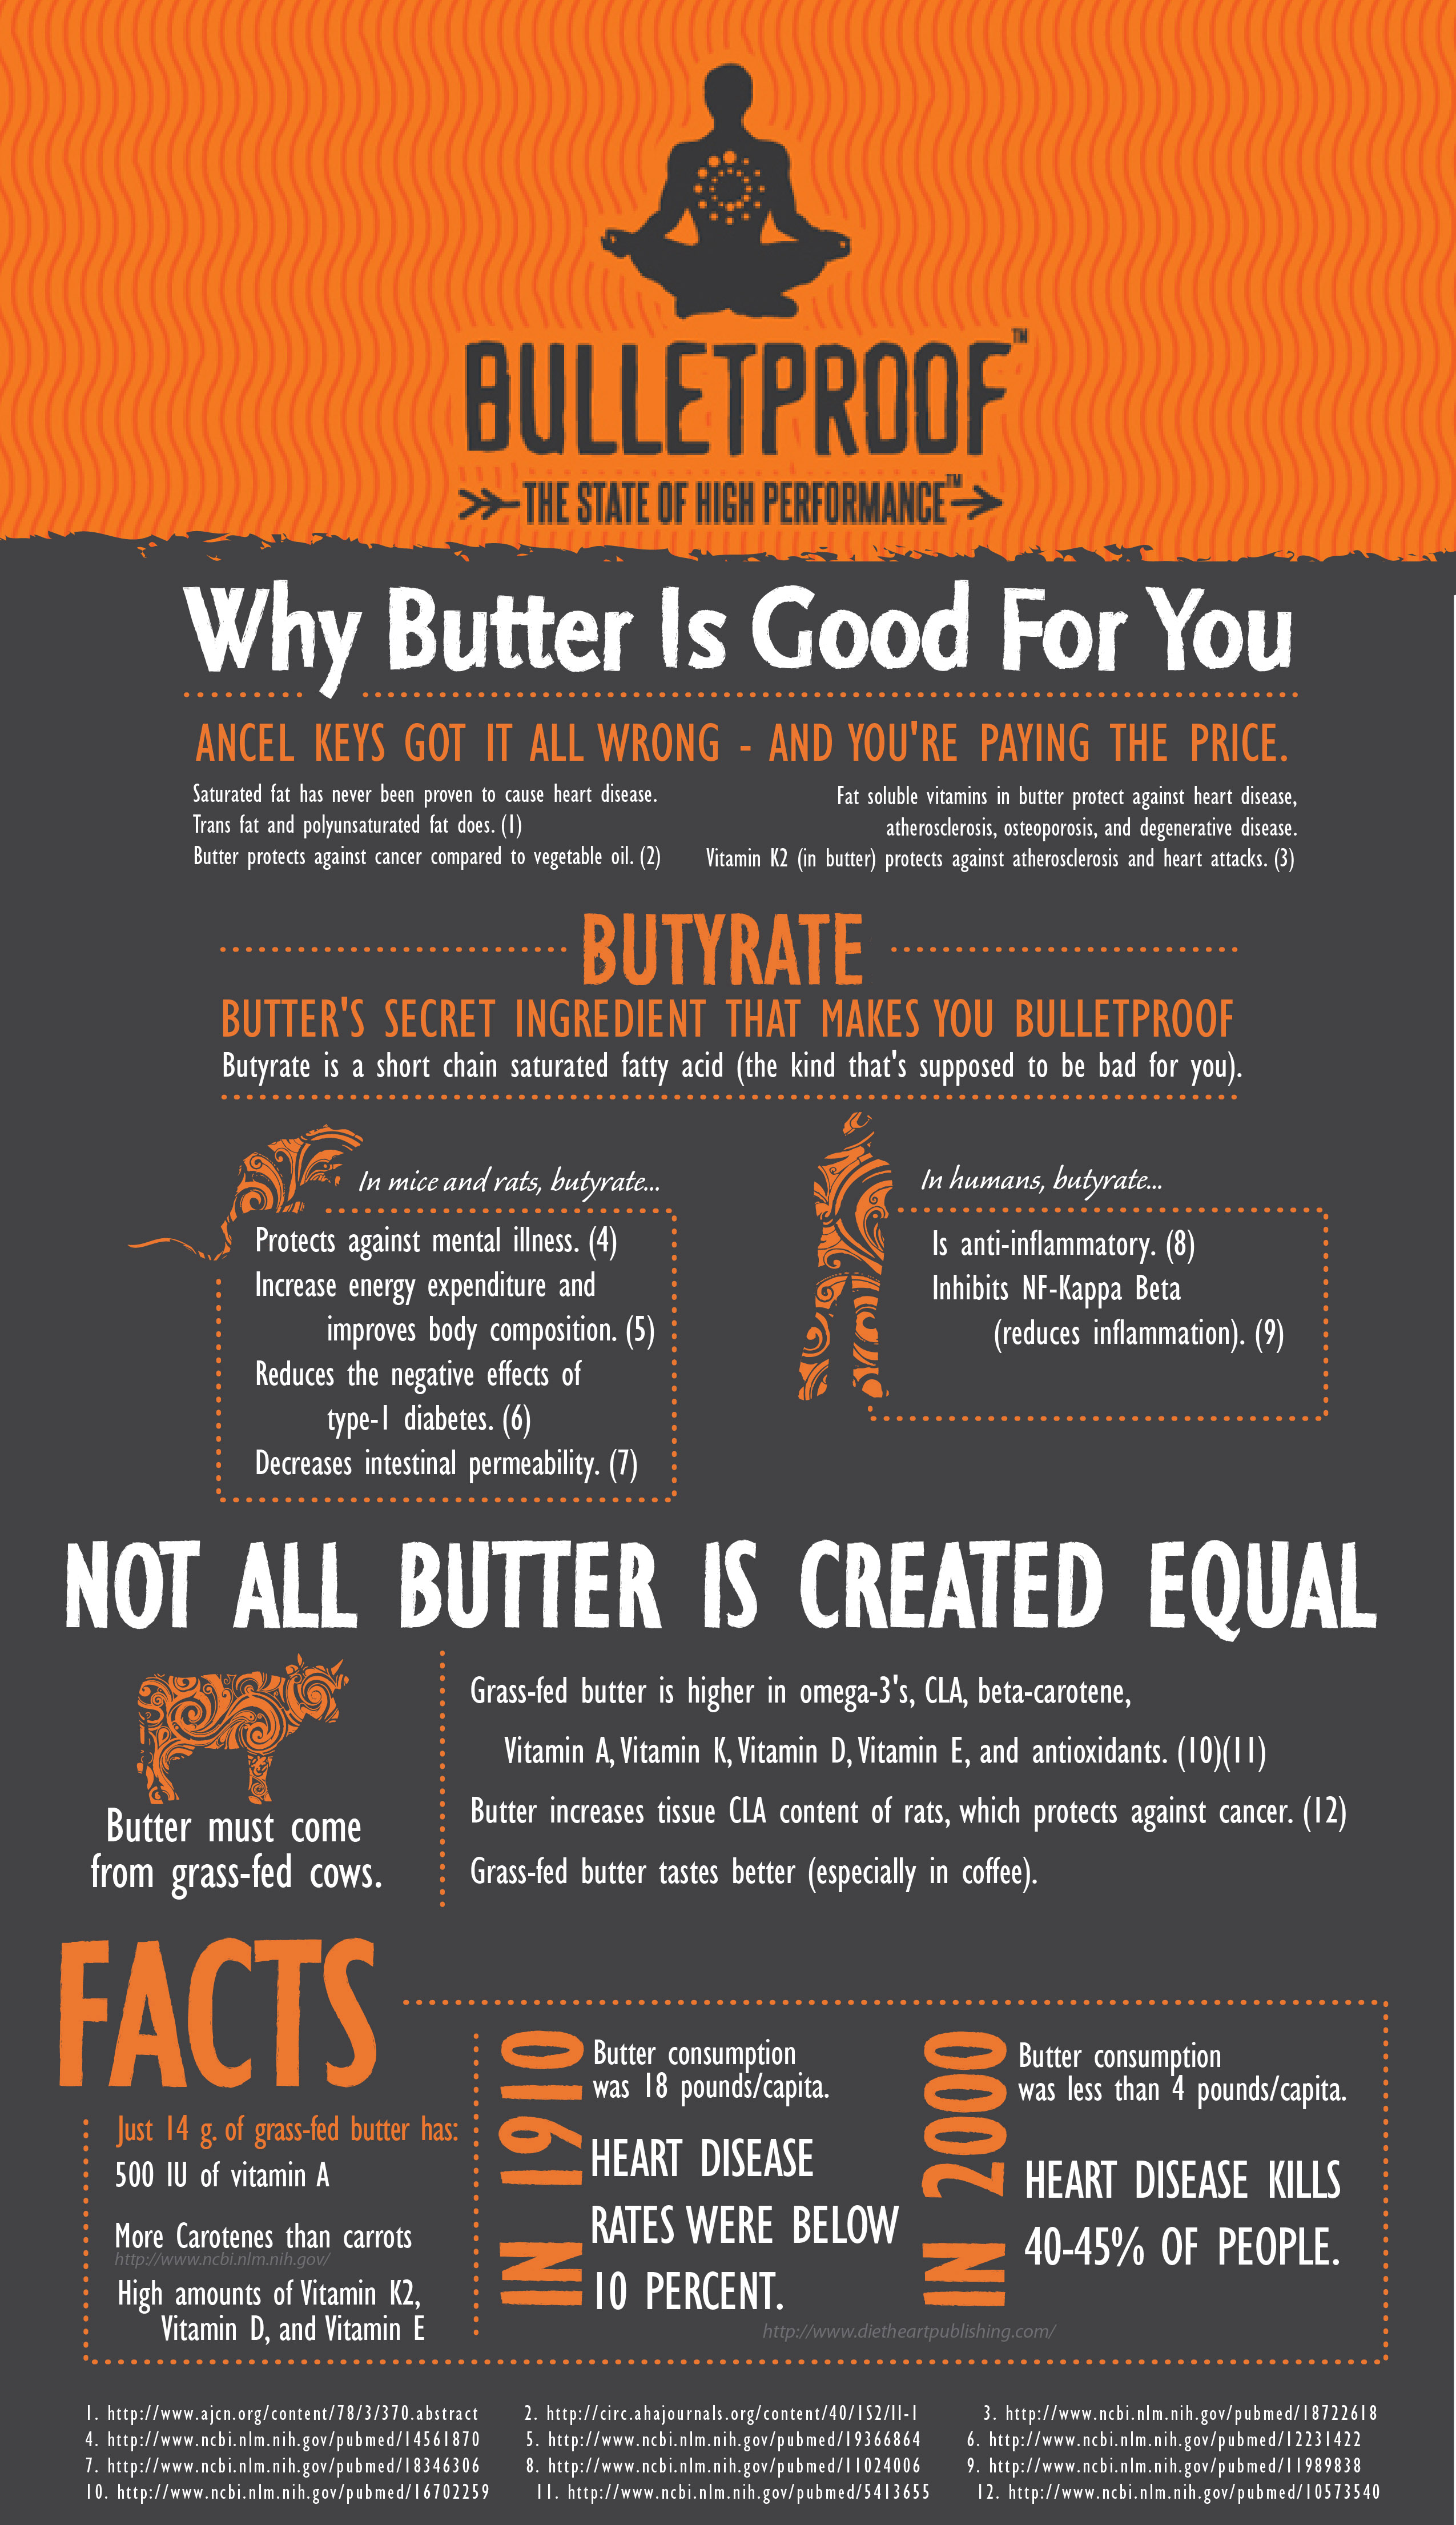 https://primalpotential.com/wp-content/uploads/2015/01/Butter-Infographic1.jpg